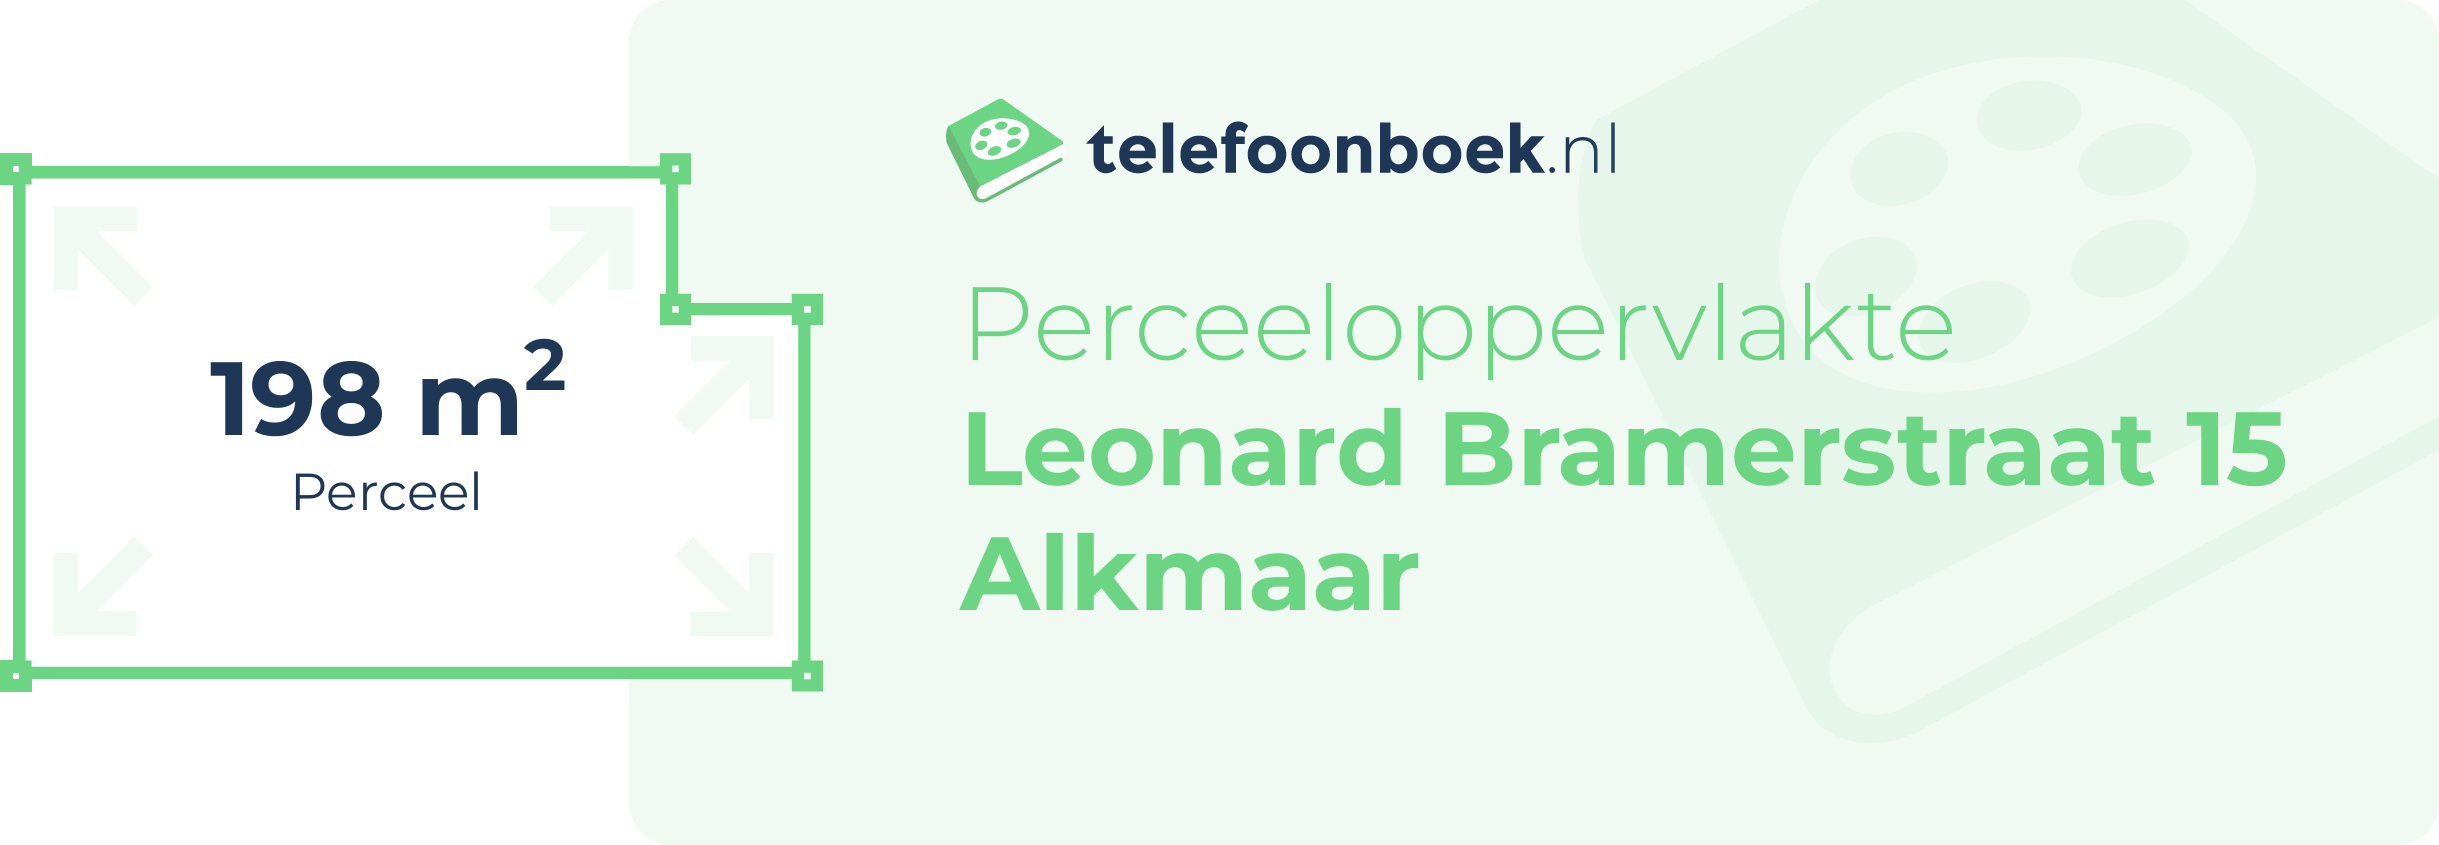 Perceeloppervlakte Leonard Bramerstraat 15 Alkmaar